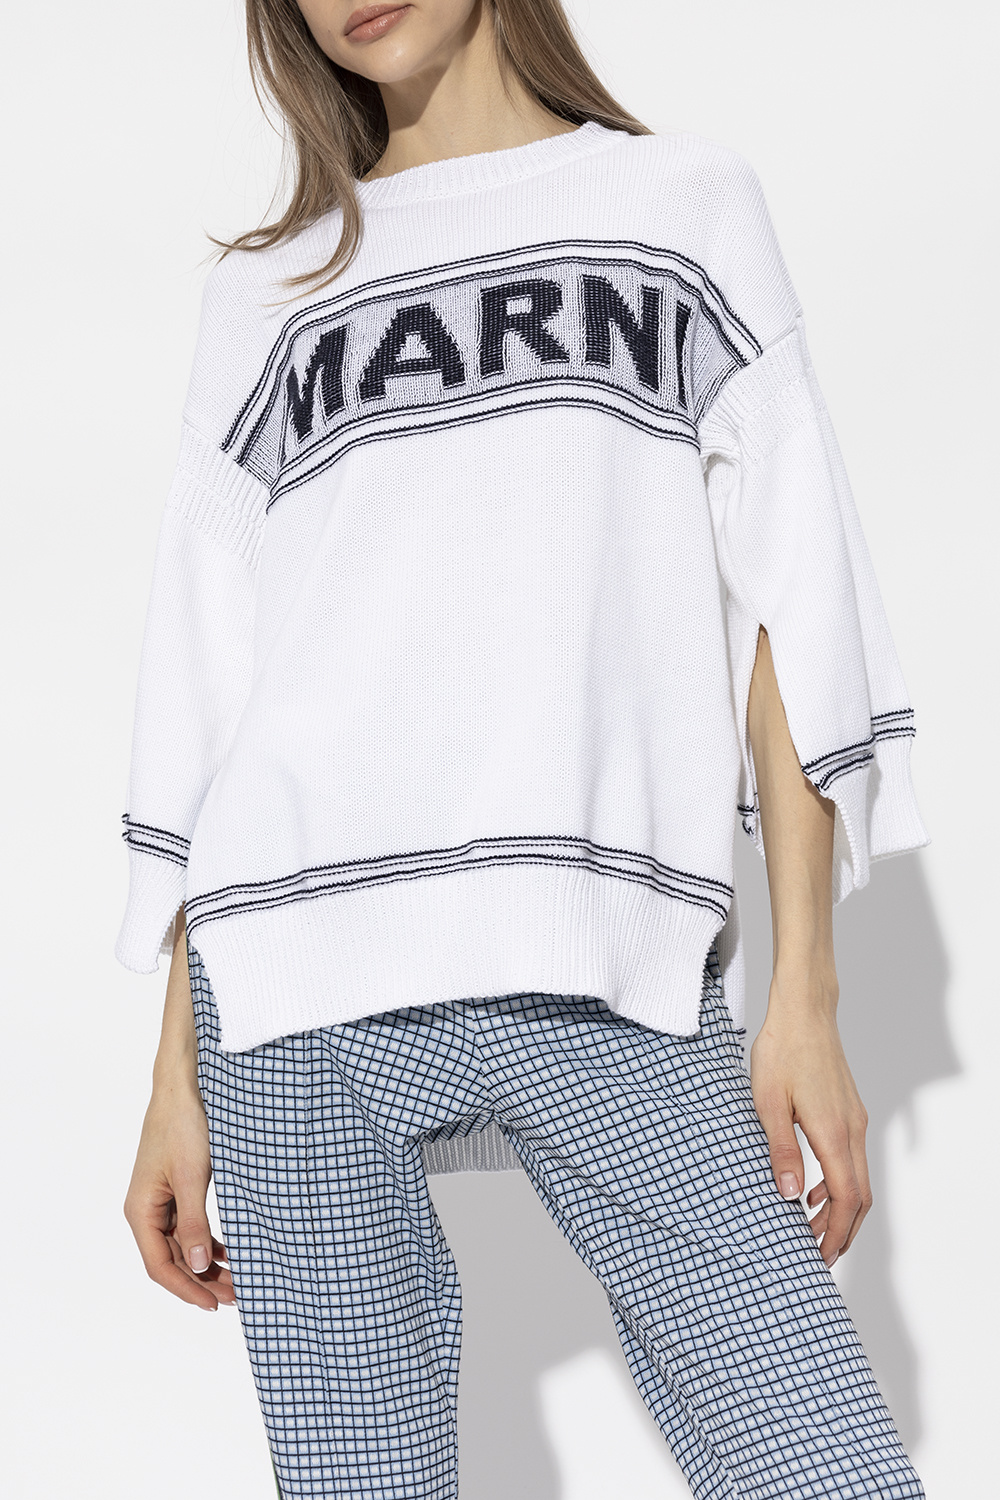 Marni Marni cropped fluffy jumper